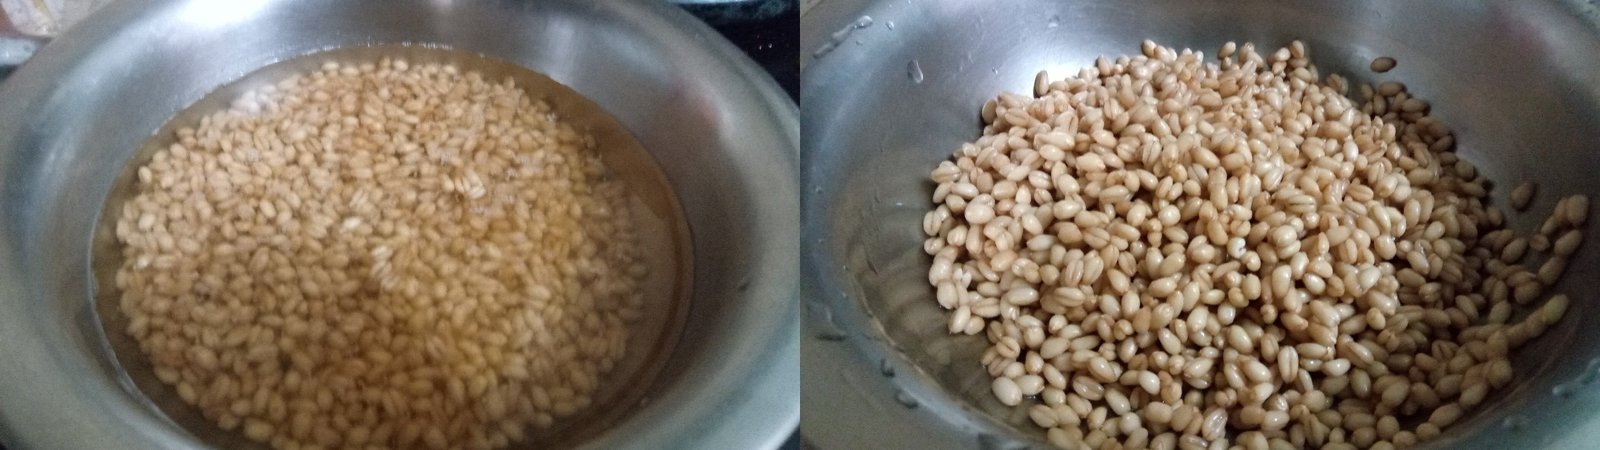 Wheat Coconut Milk Pudding | Godhi Halbai